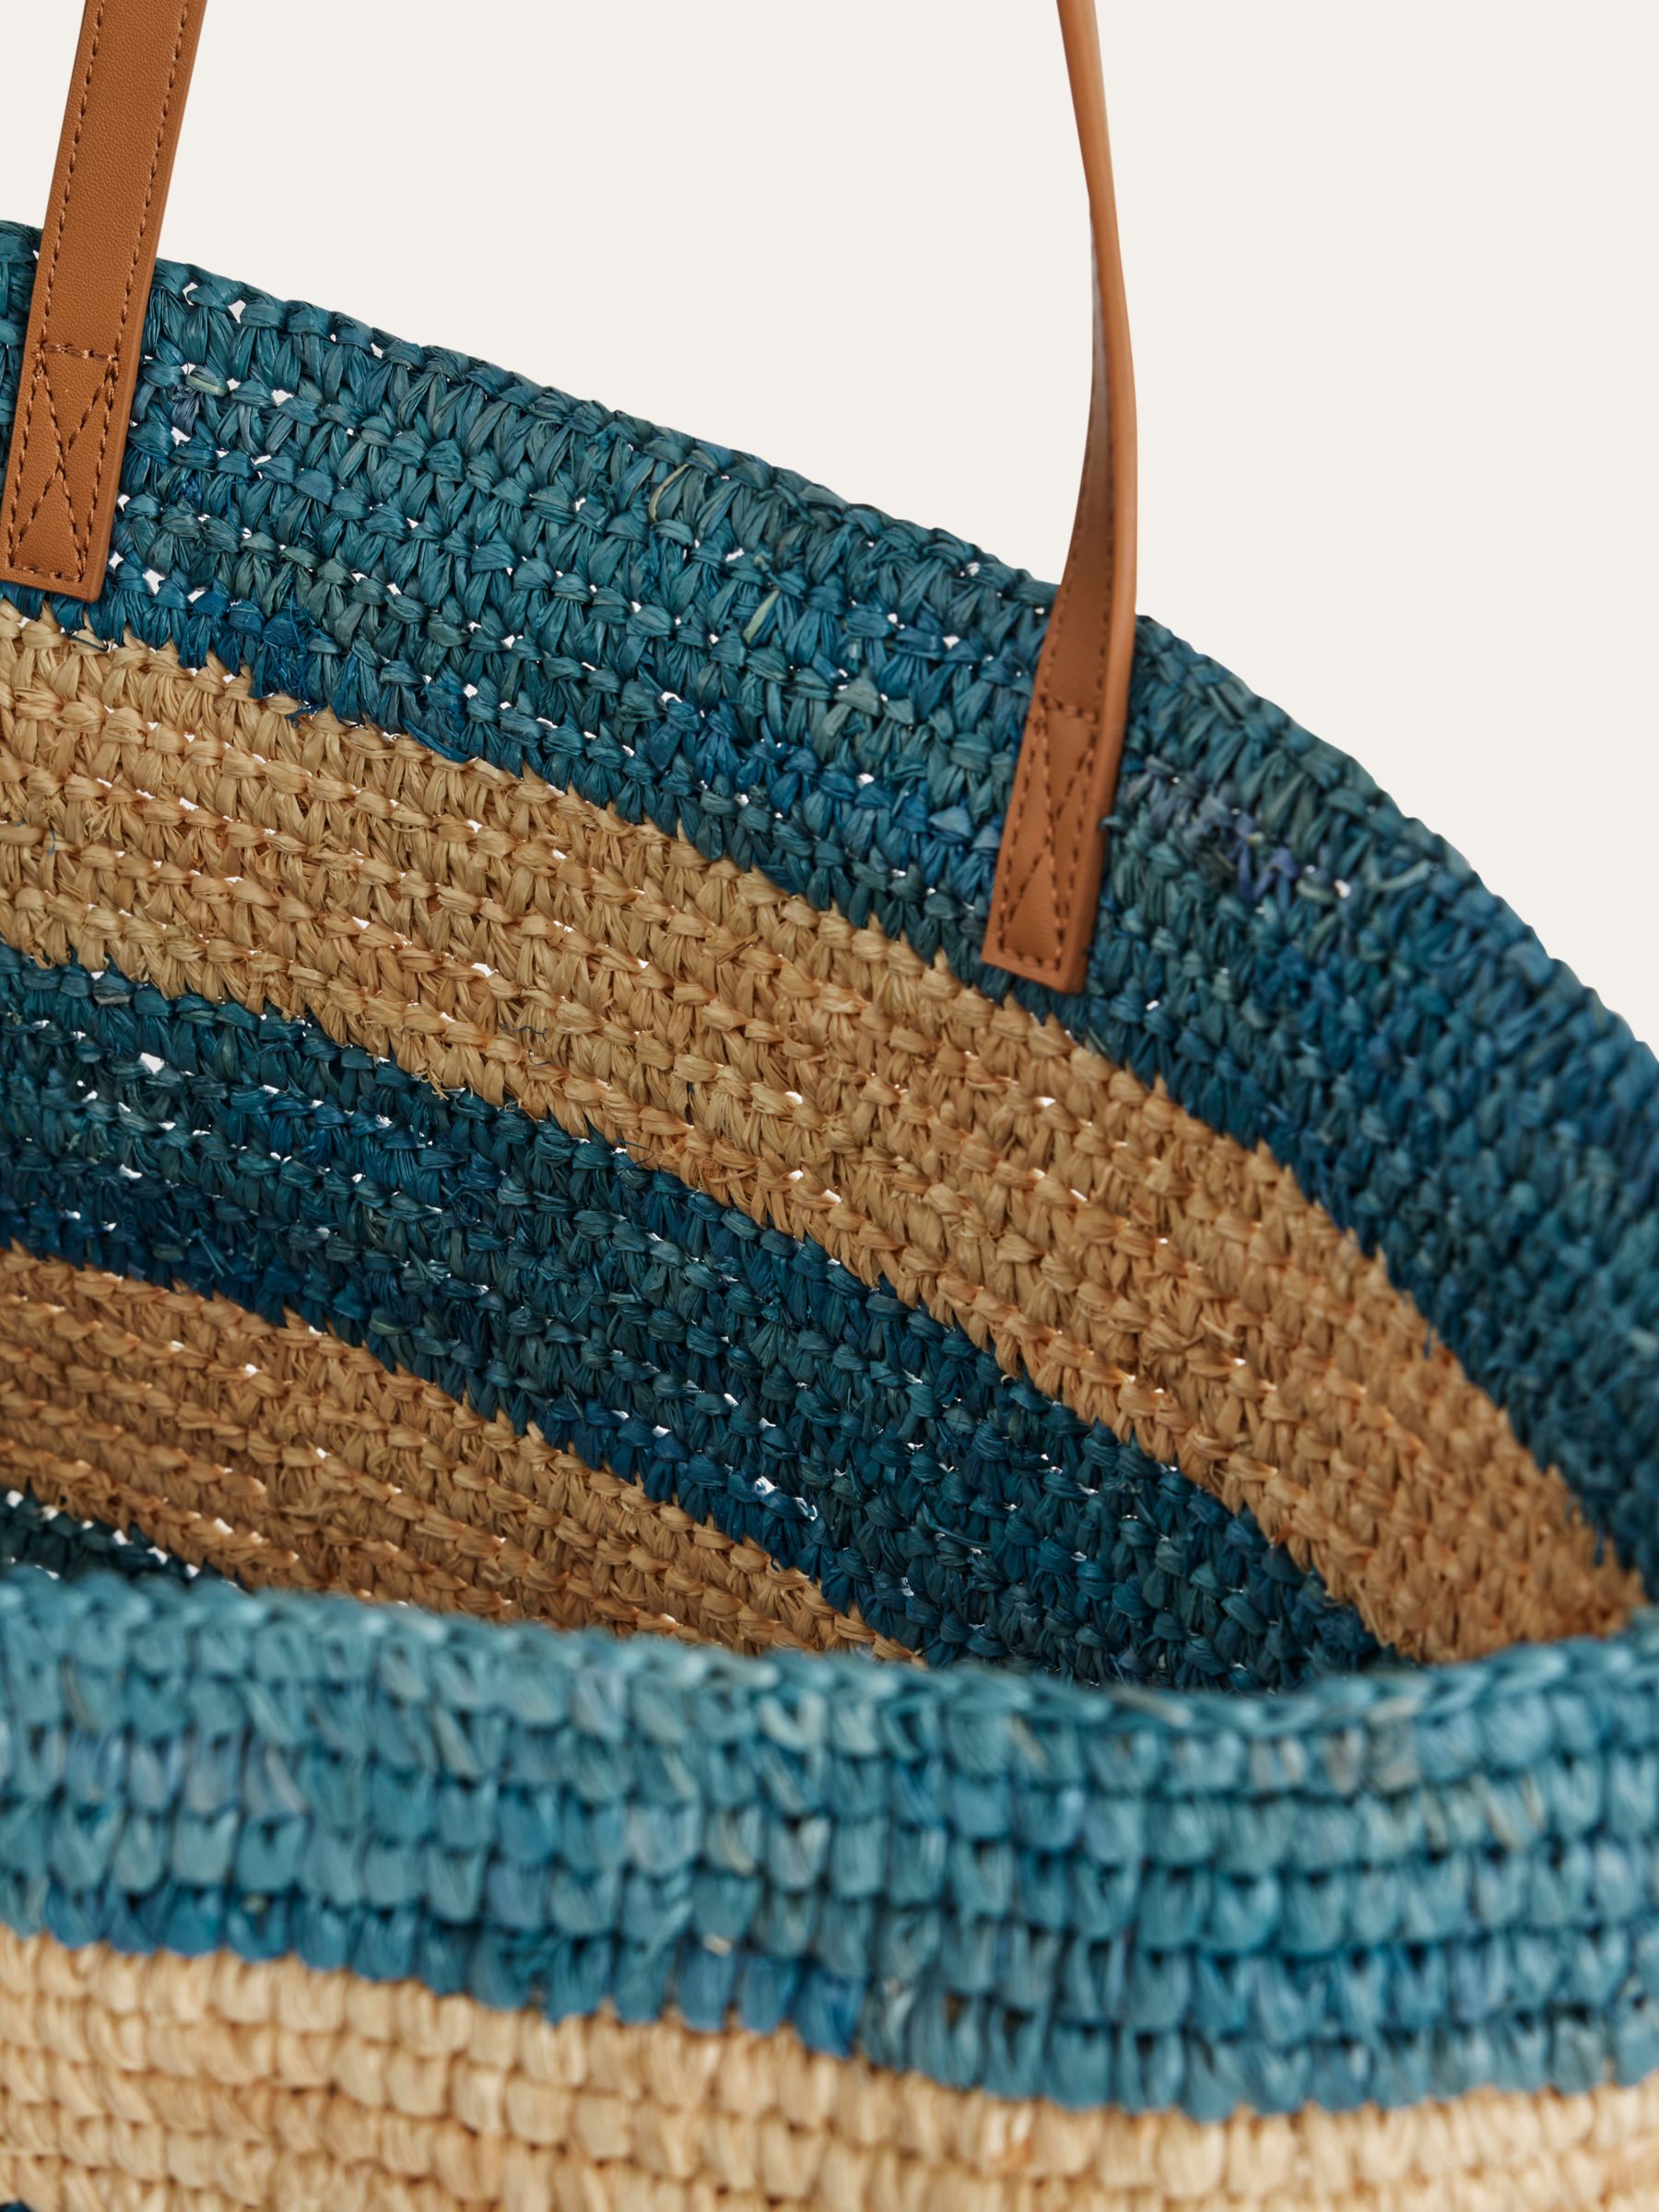 Boden Raffia Tote Bag, Natural/Blue, One Size